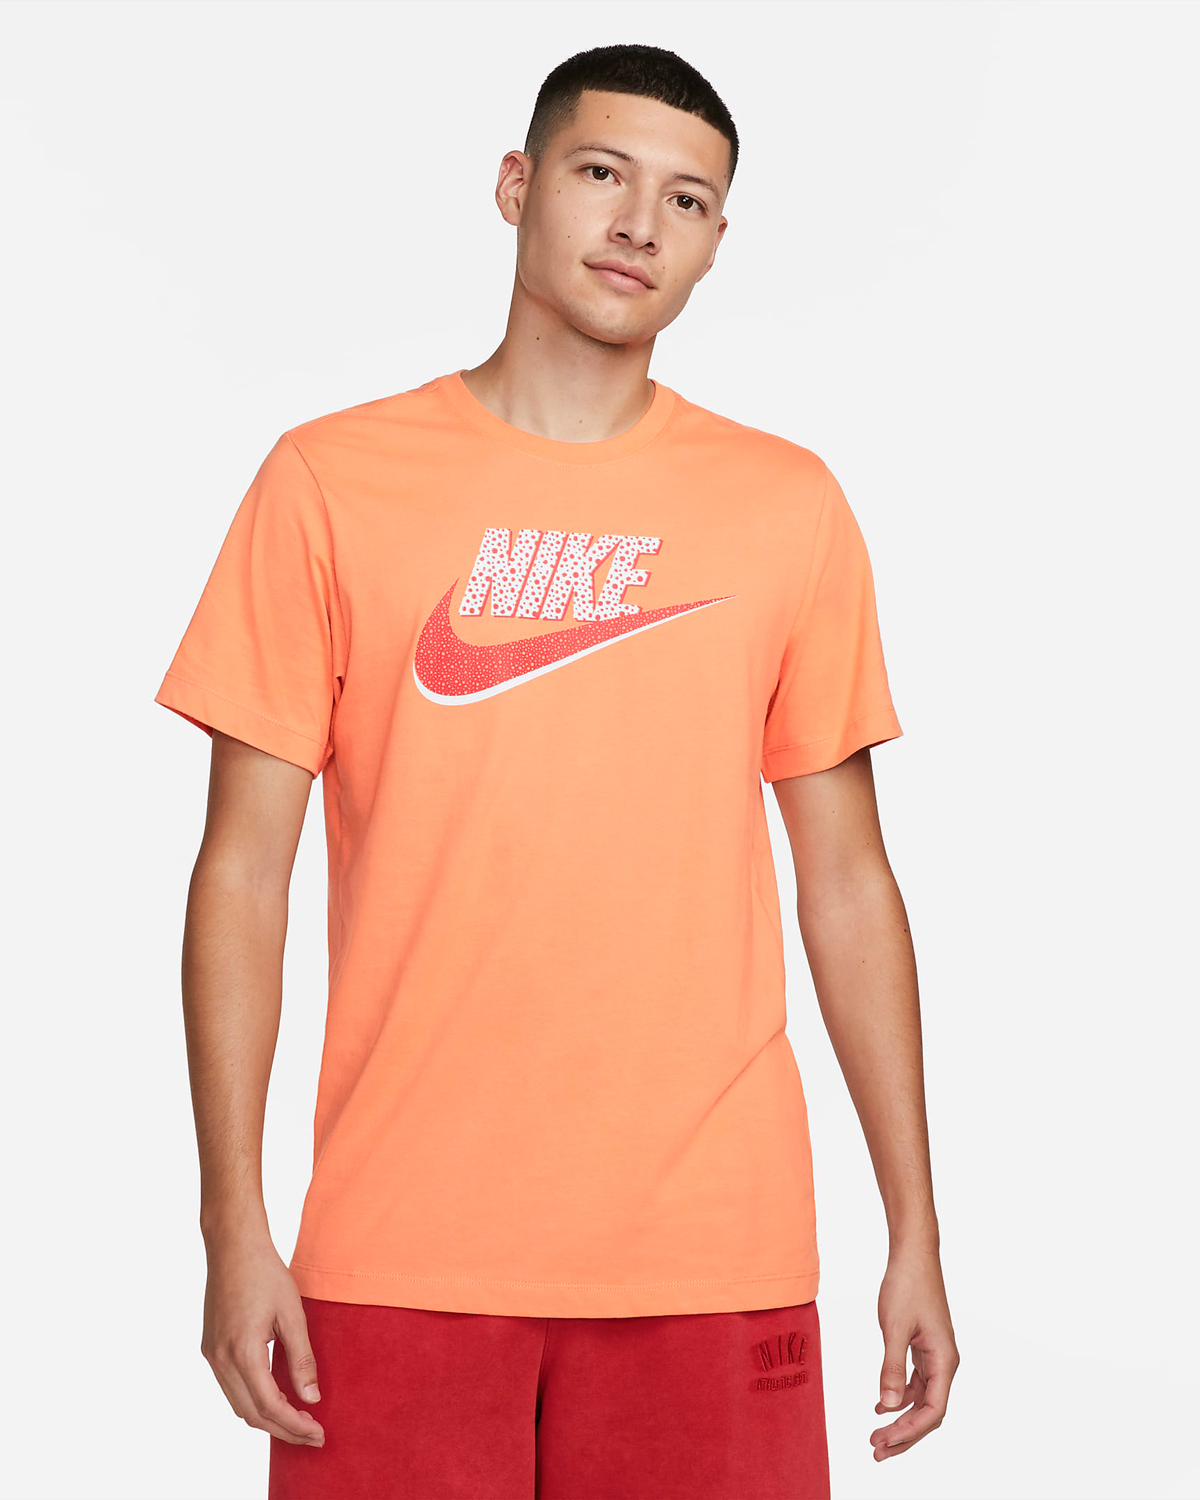 Nike-Sportswear-Futura-T-Shirt-Orange-Trance-Light-Crimson